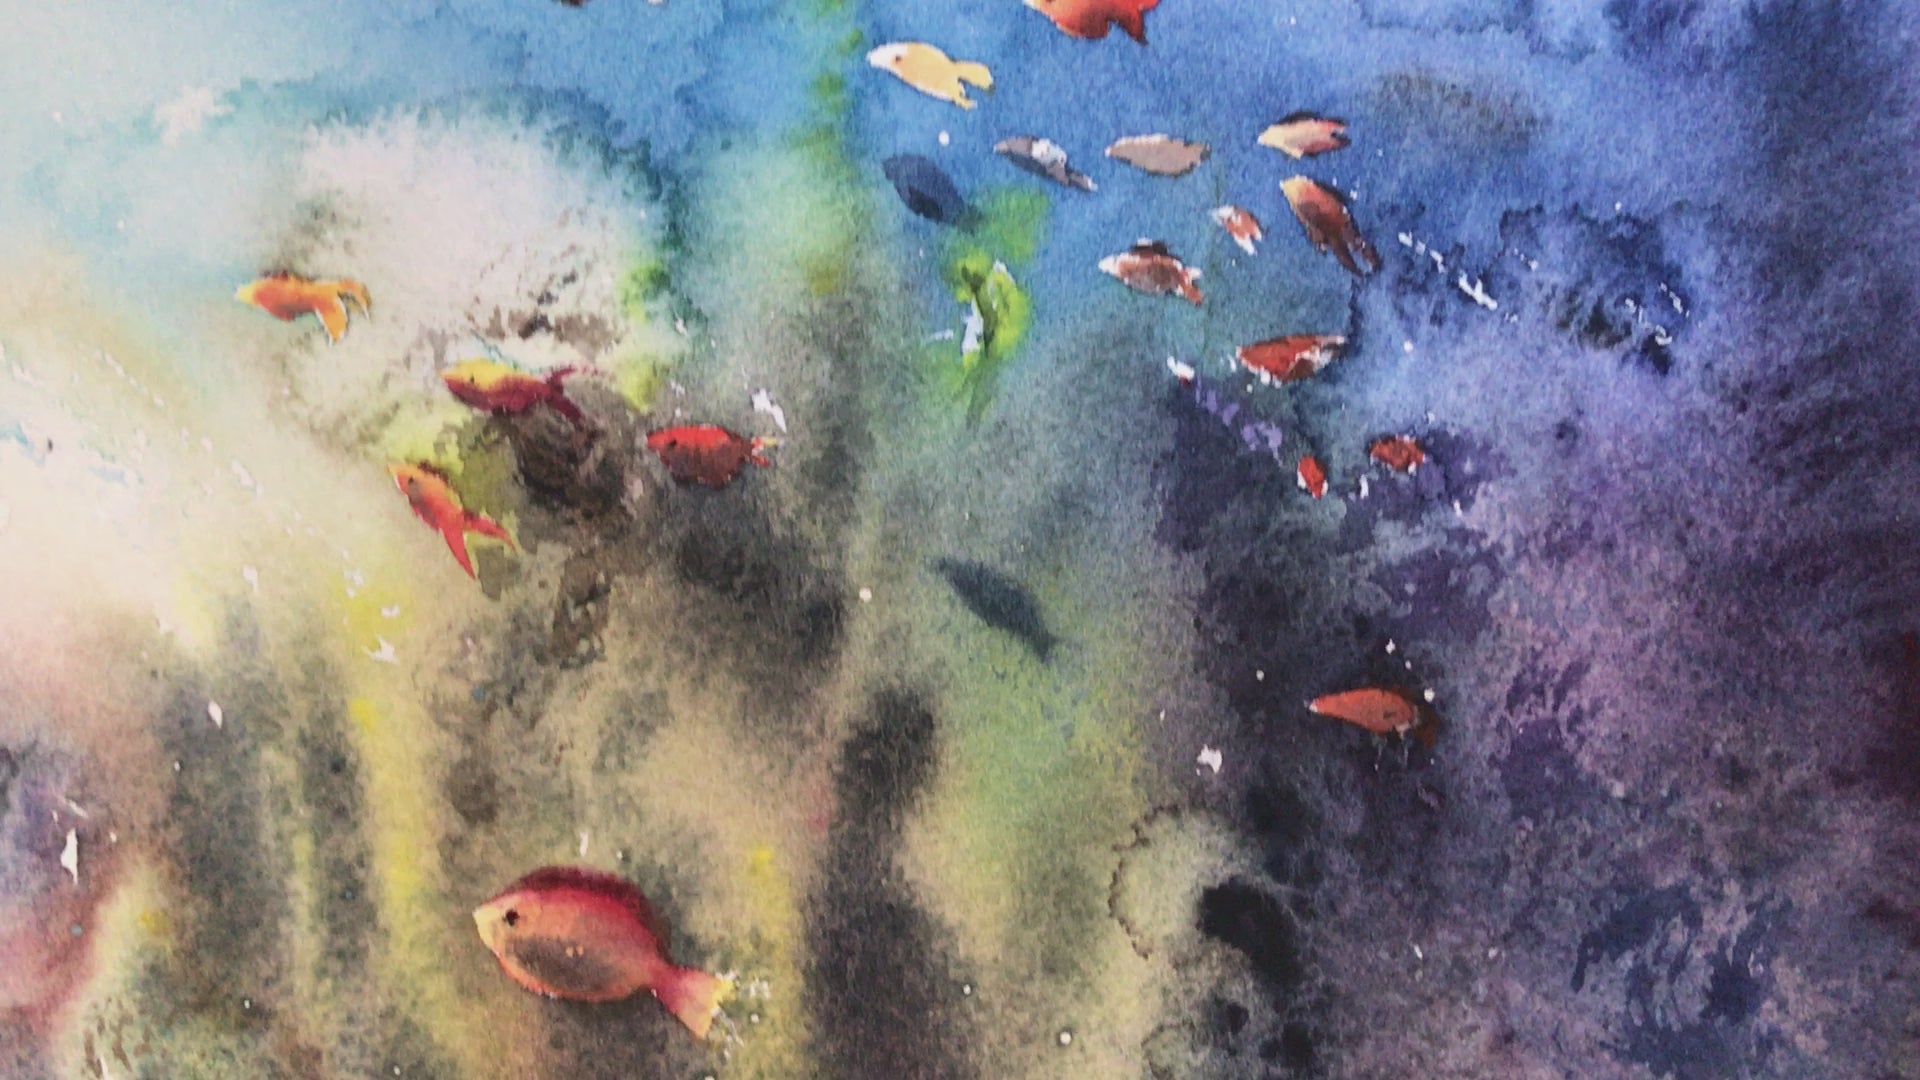 underwater fish paintings